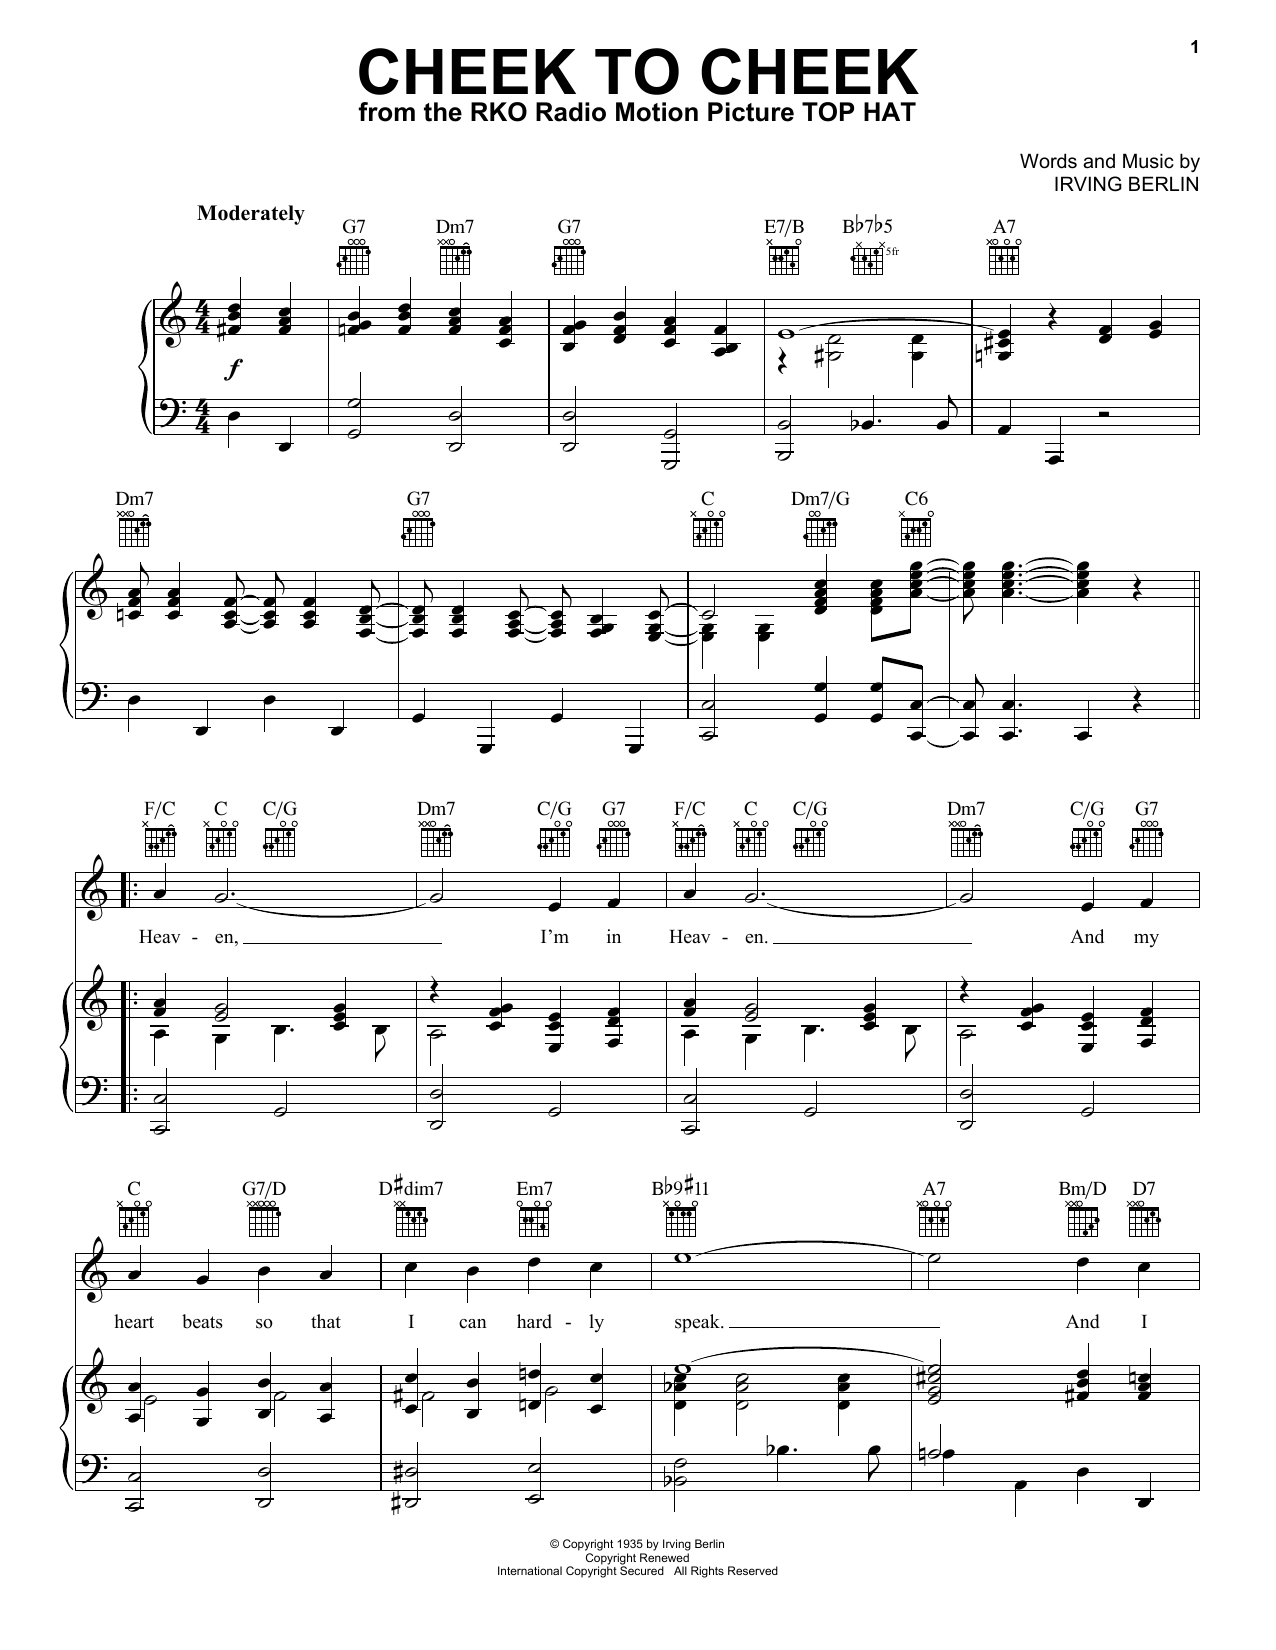 Irving Berlin Cheek To Cheek Sheet Music Notes & Chords for Guitar Tab - Download or Print PDF